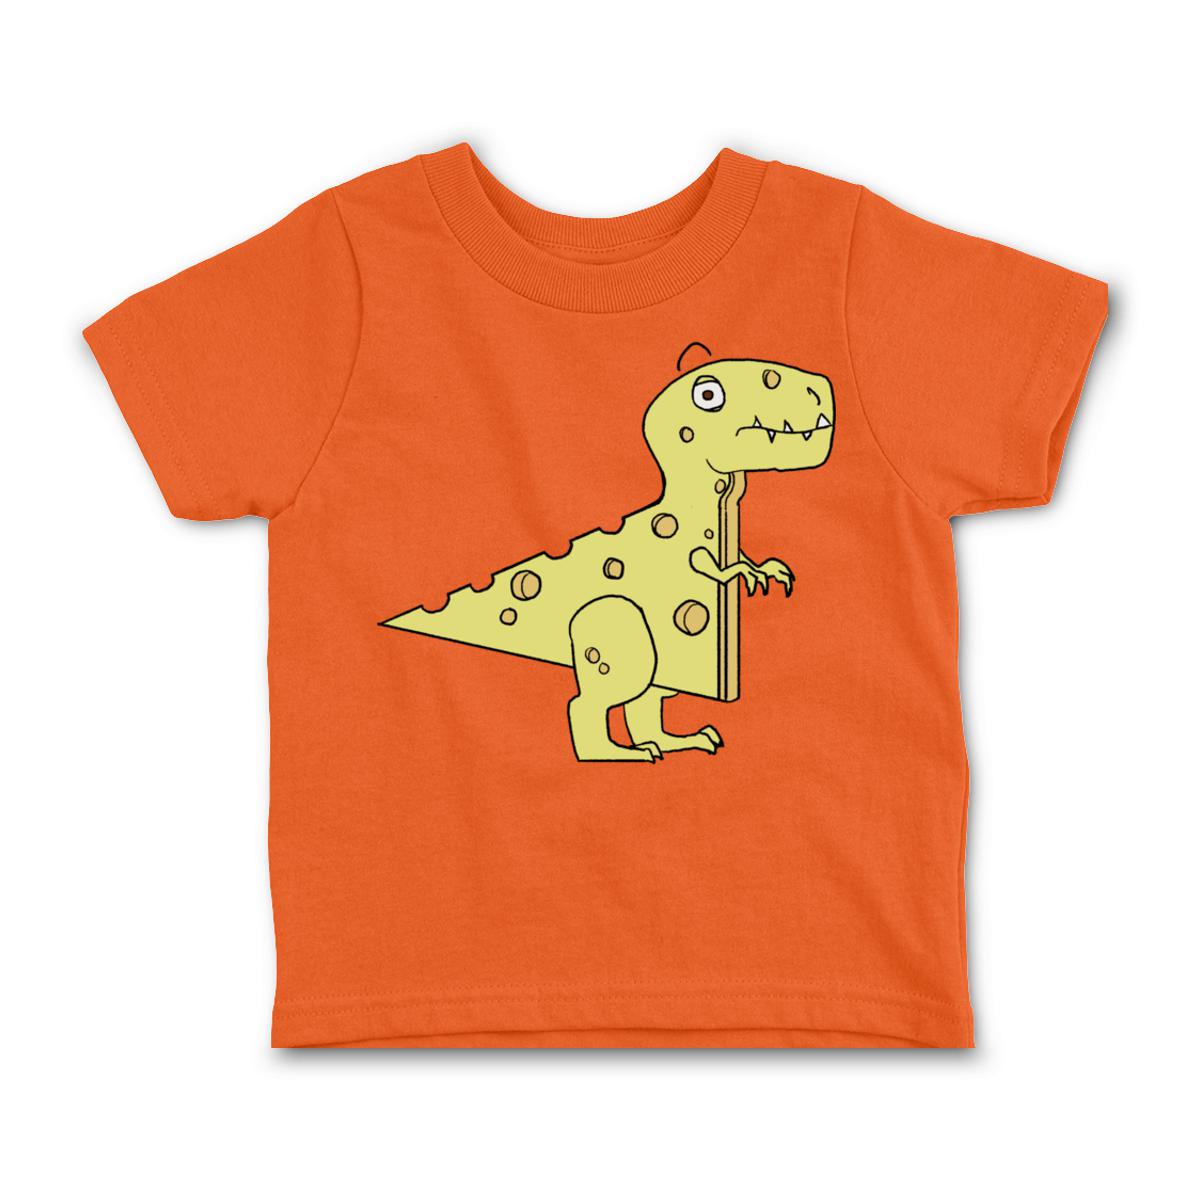 Cheeseosaurus Rex Toddler Tee 2T orange